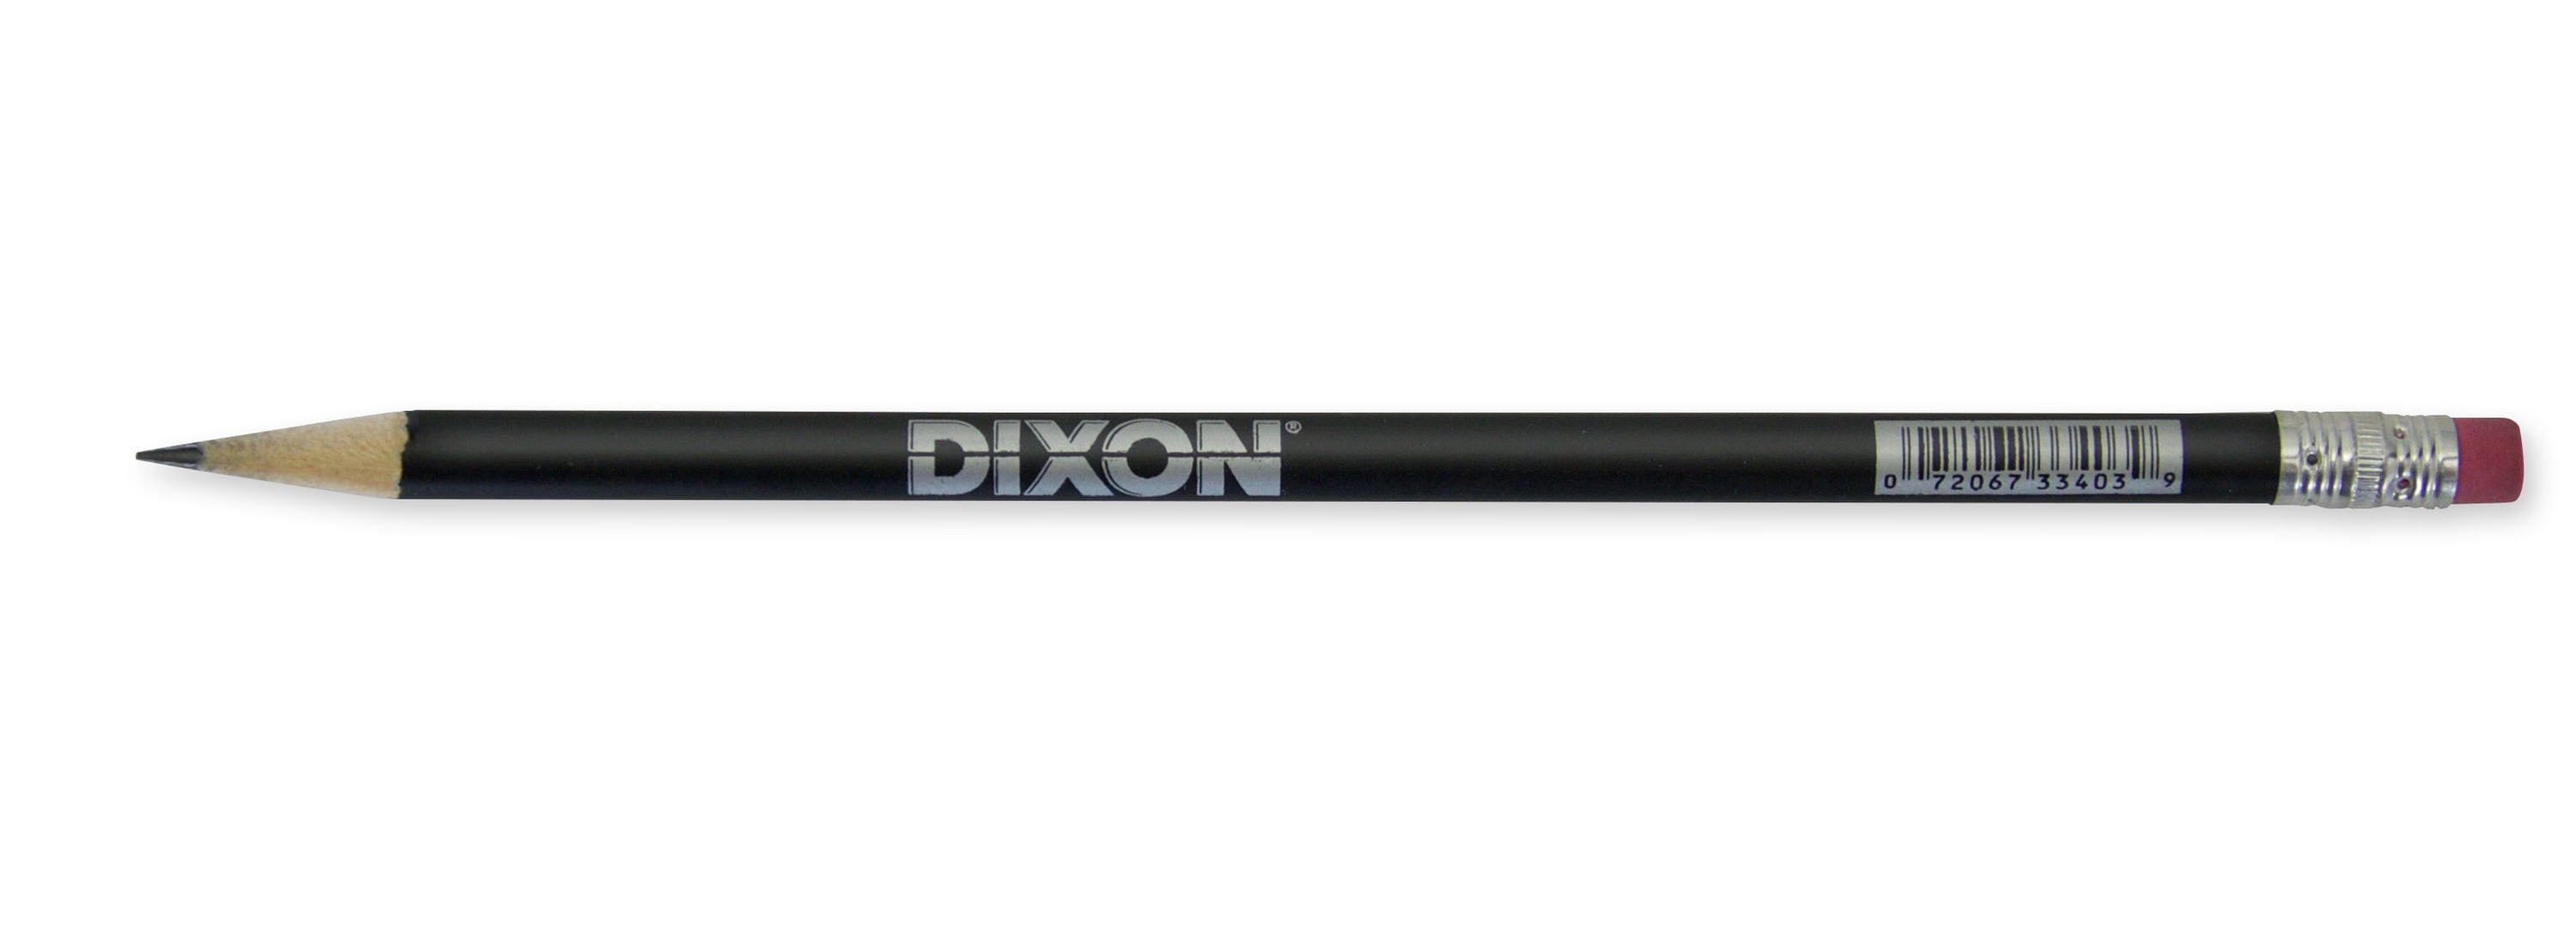 Dixon Jumbo Black Pencil